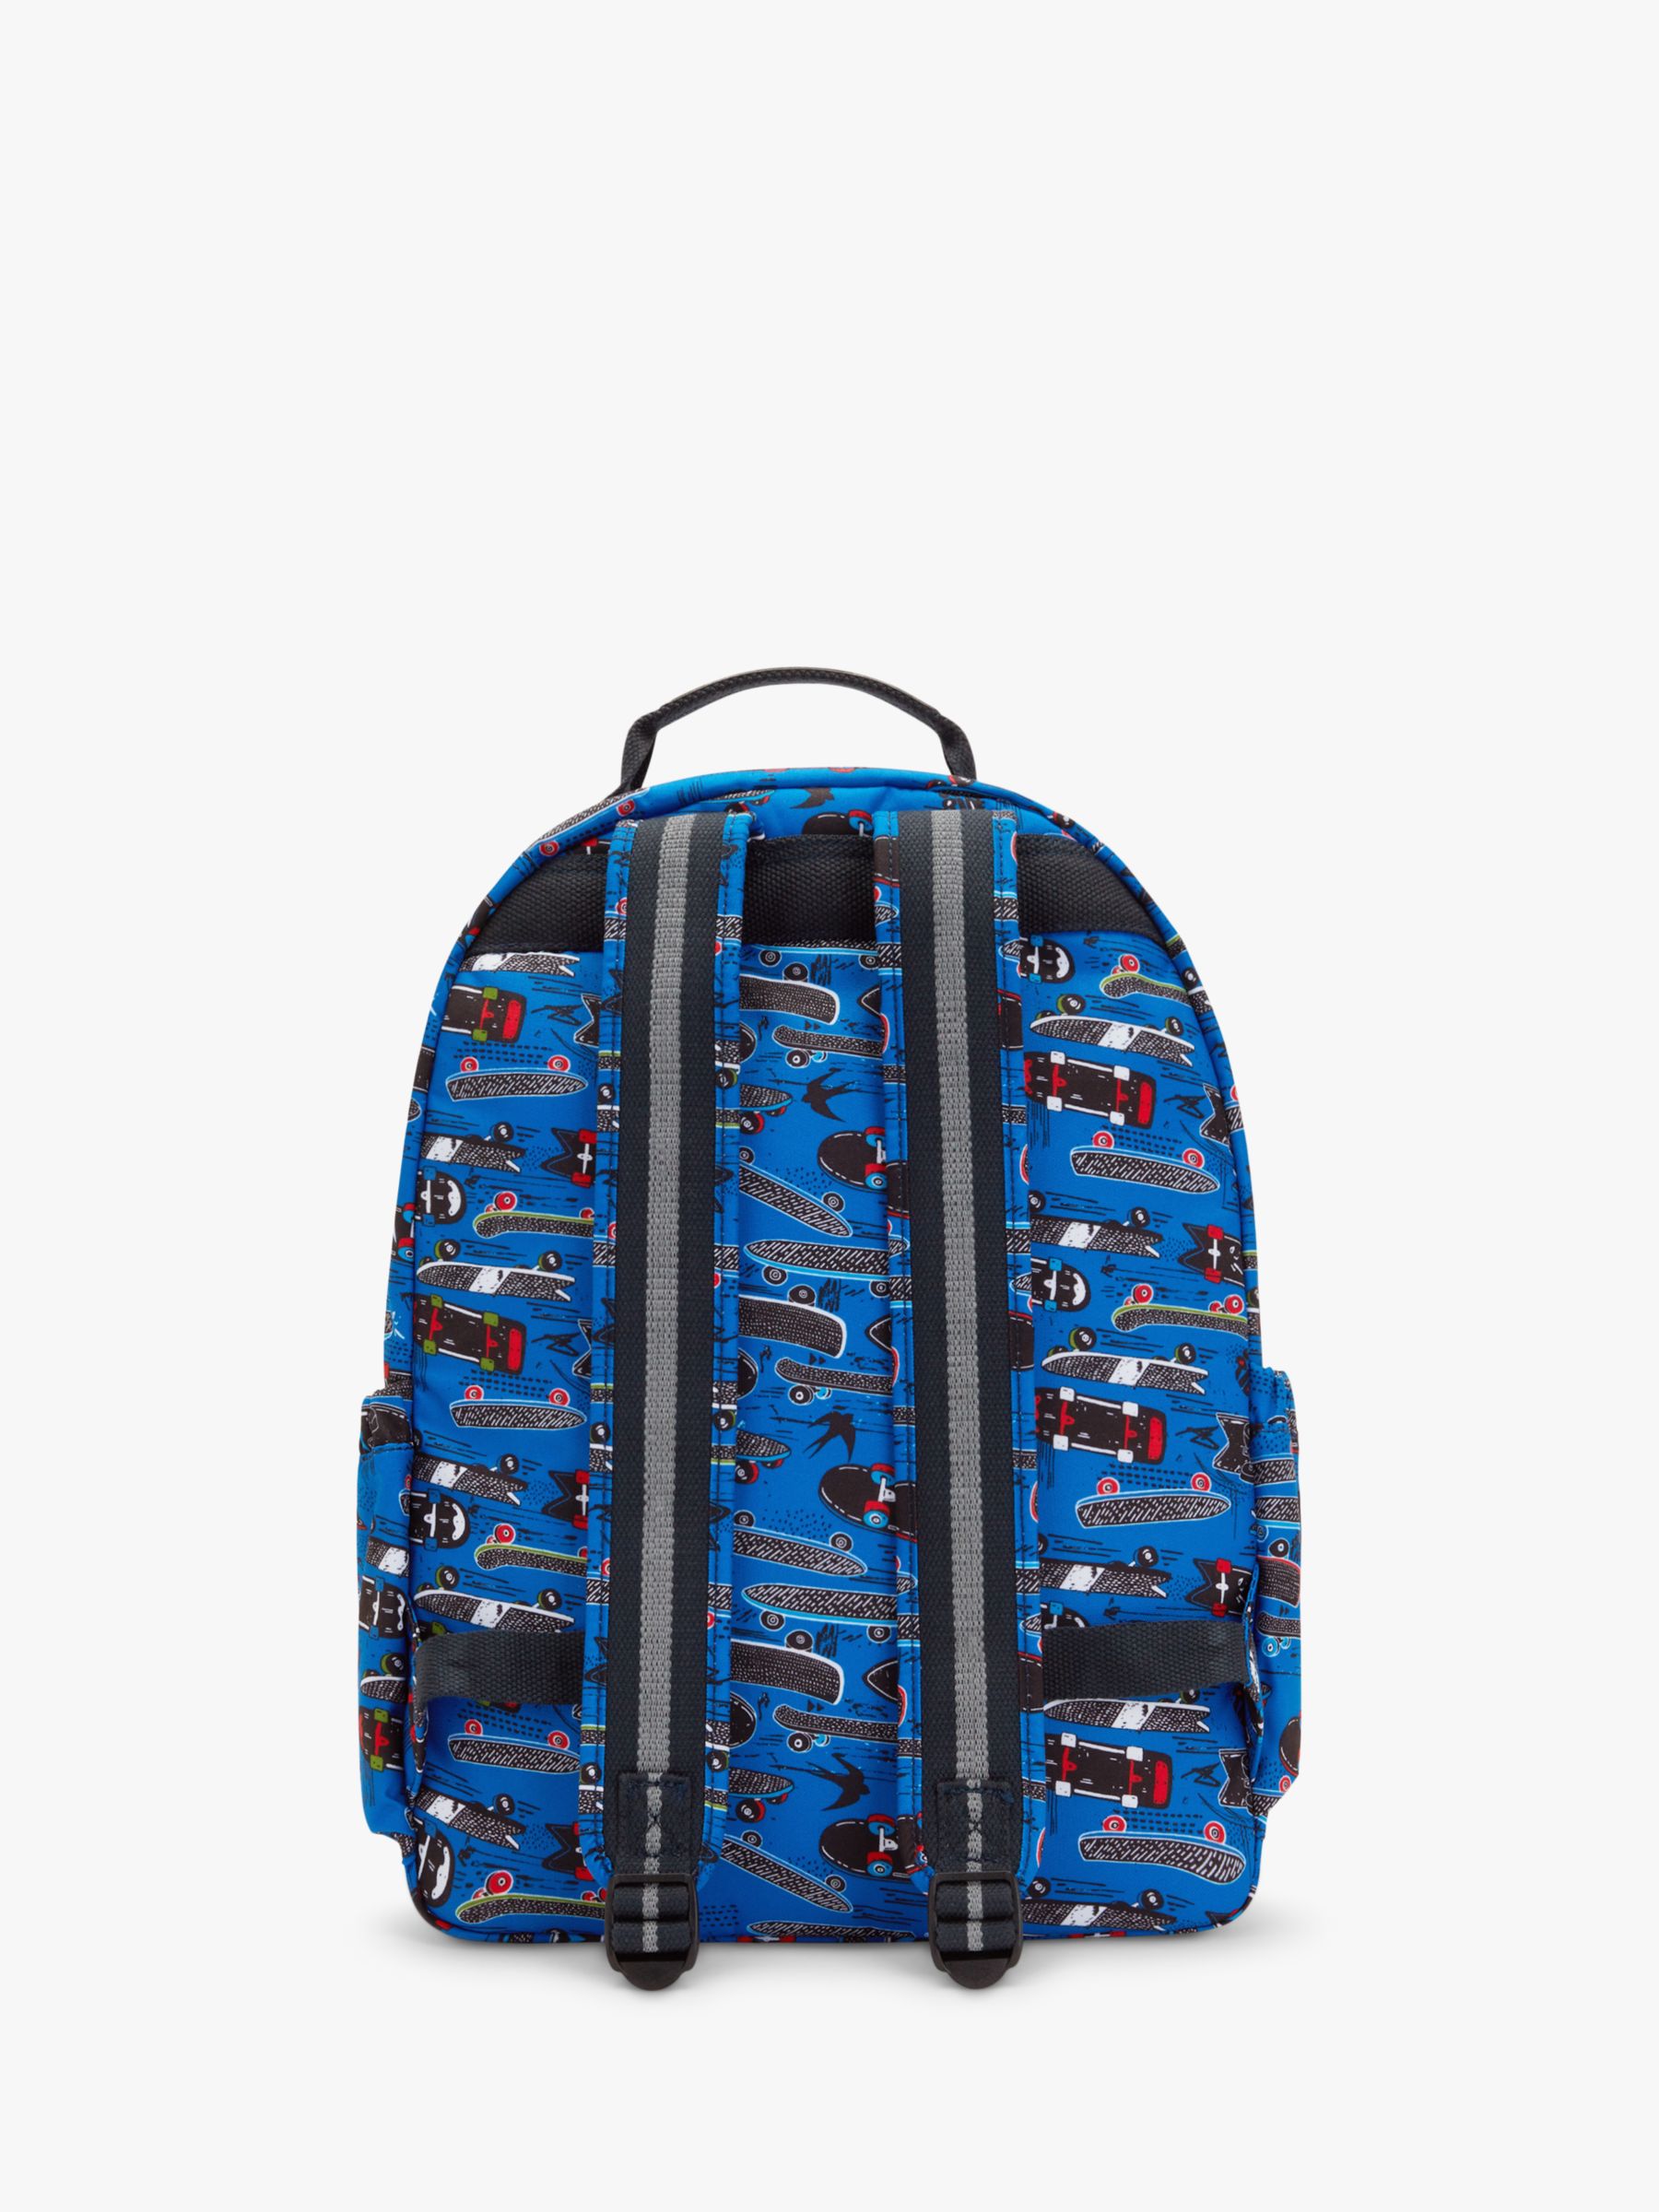 27 Outfit backpack ideas  louis vuitton palm springs mini, louis vuitton  backpack, fashion